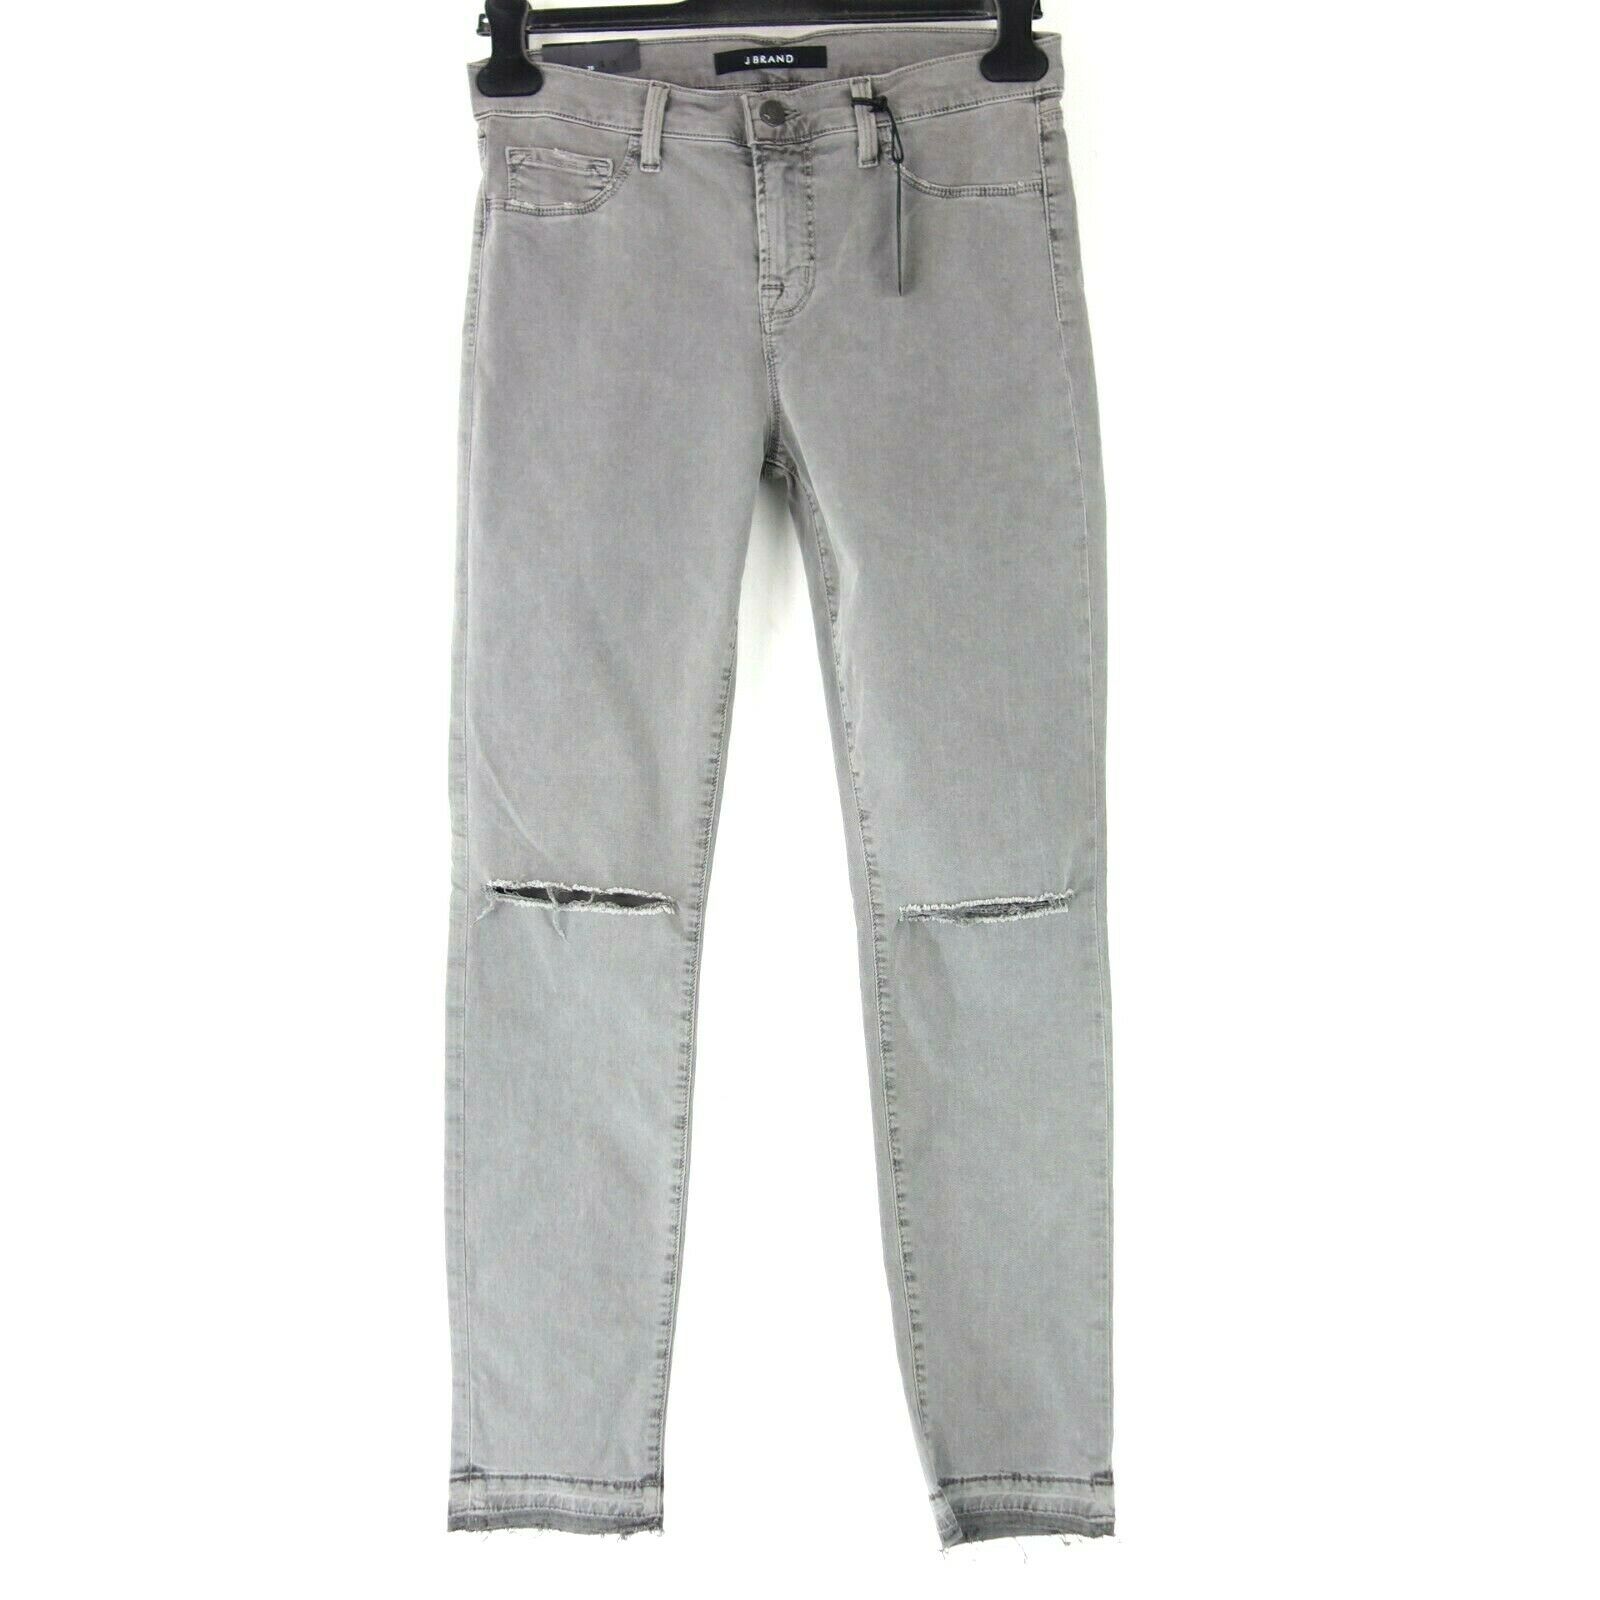 J Brand Damen Jeans Hose Damenhose W28 Grau Cropped Skinny Leg Mid Rise Neu